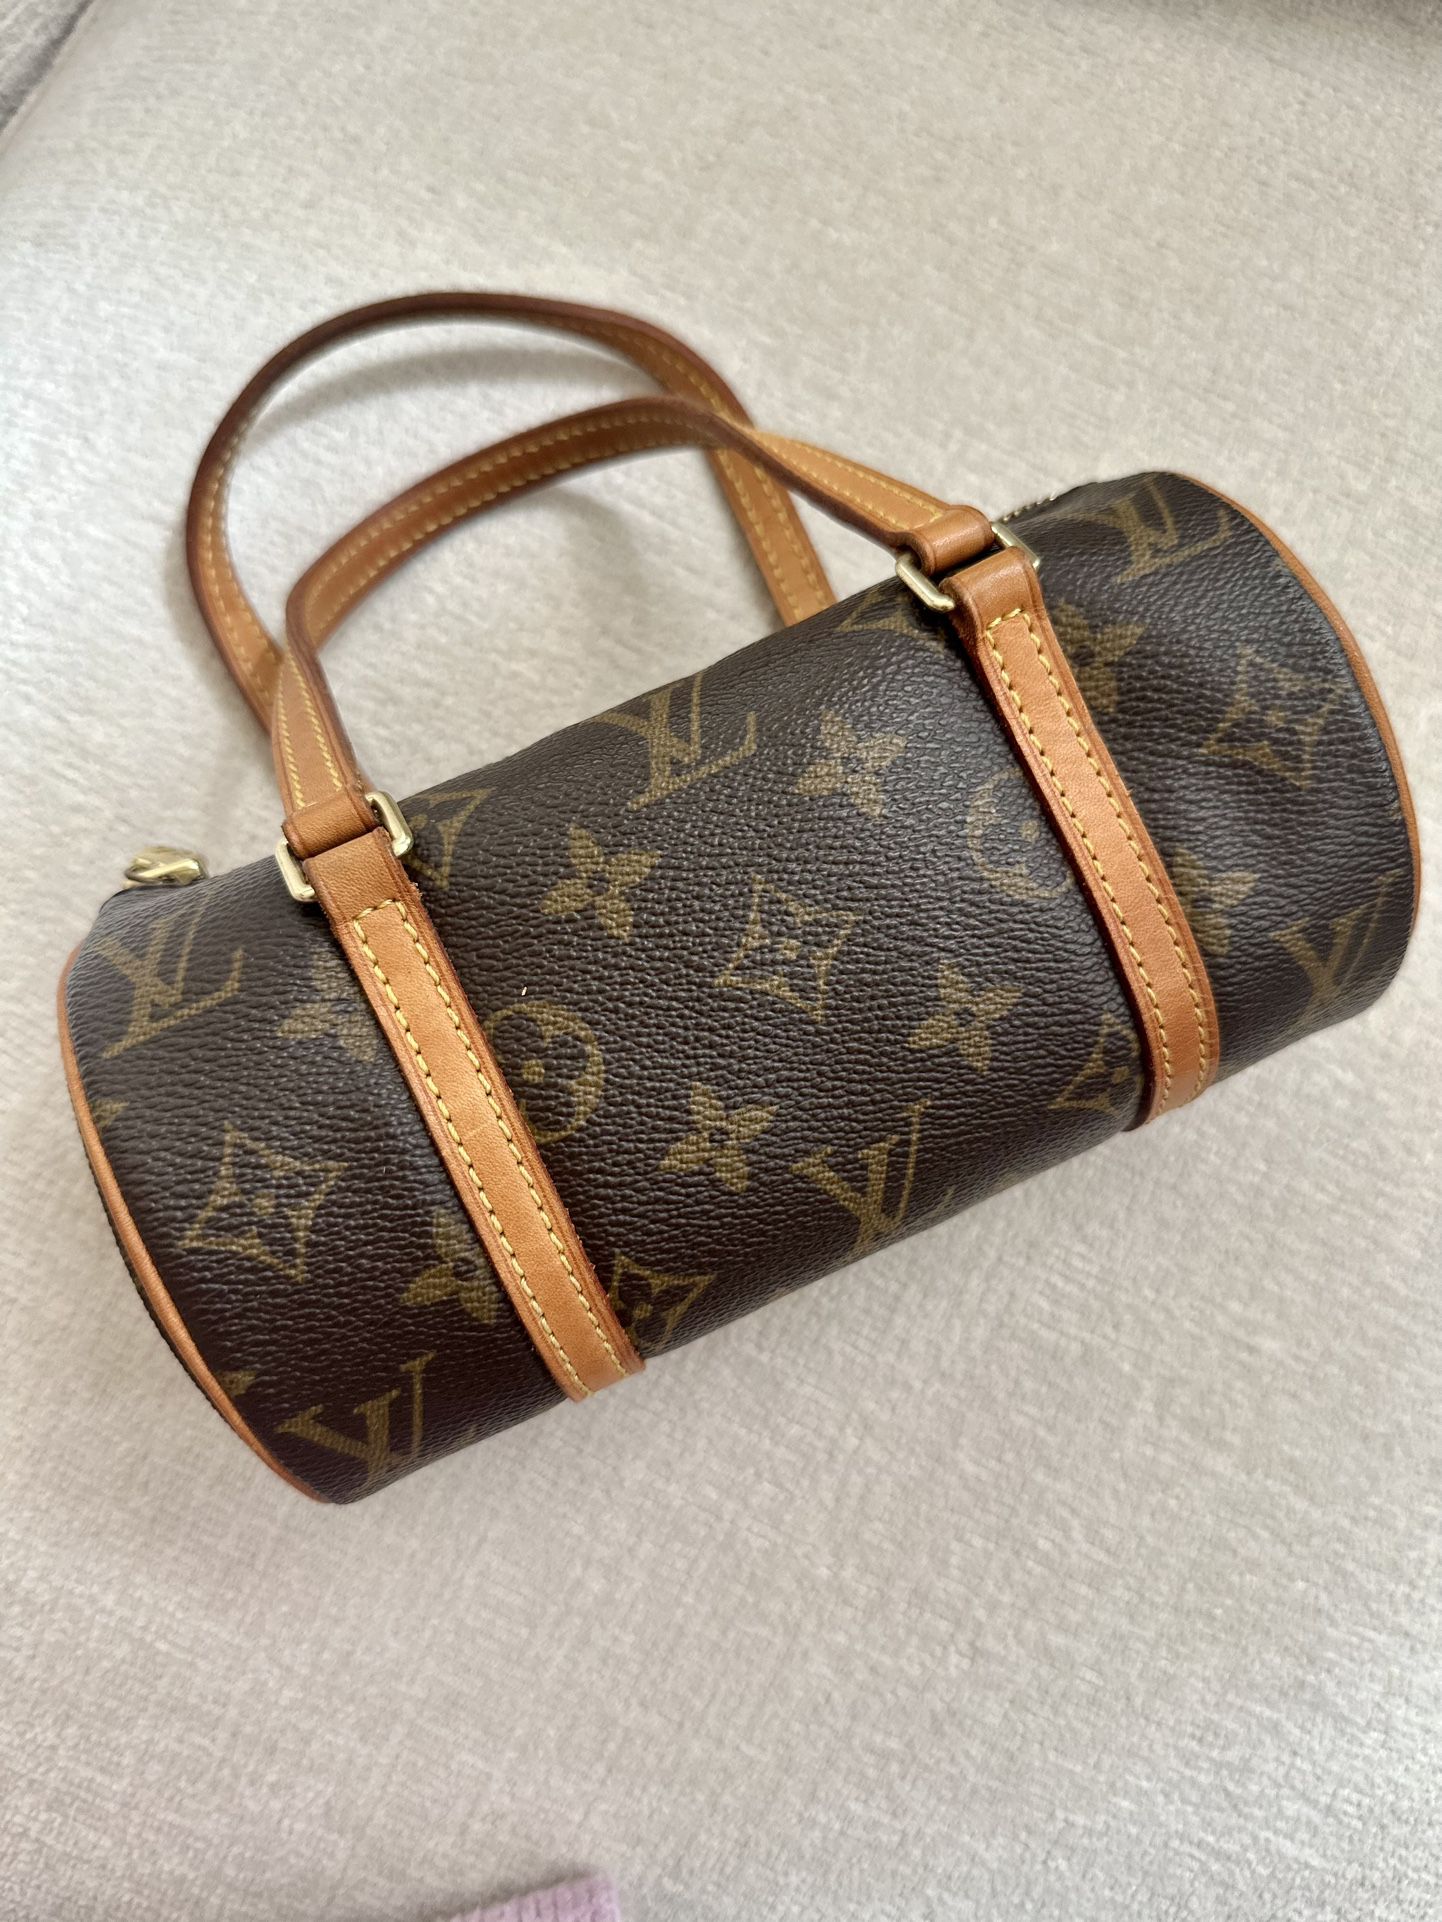 Sold at Auction: A Louis Vuitton monogrammed leather Papillon bag, 2004